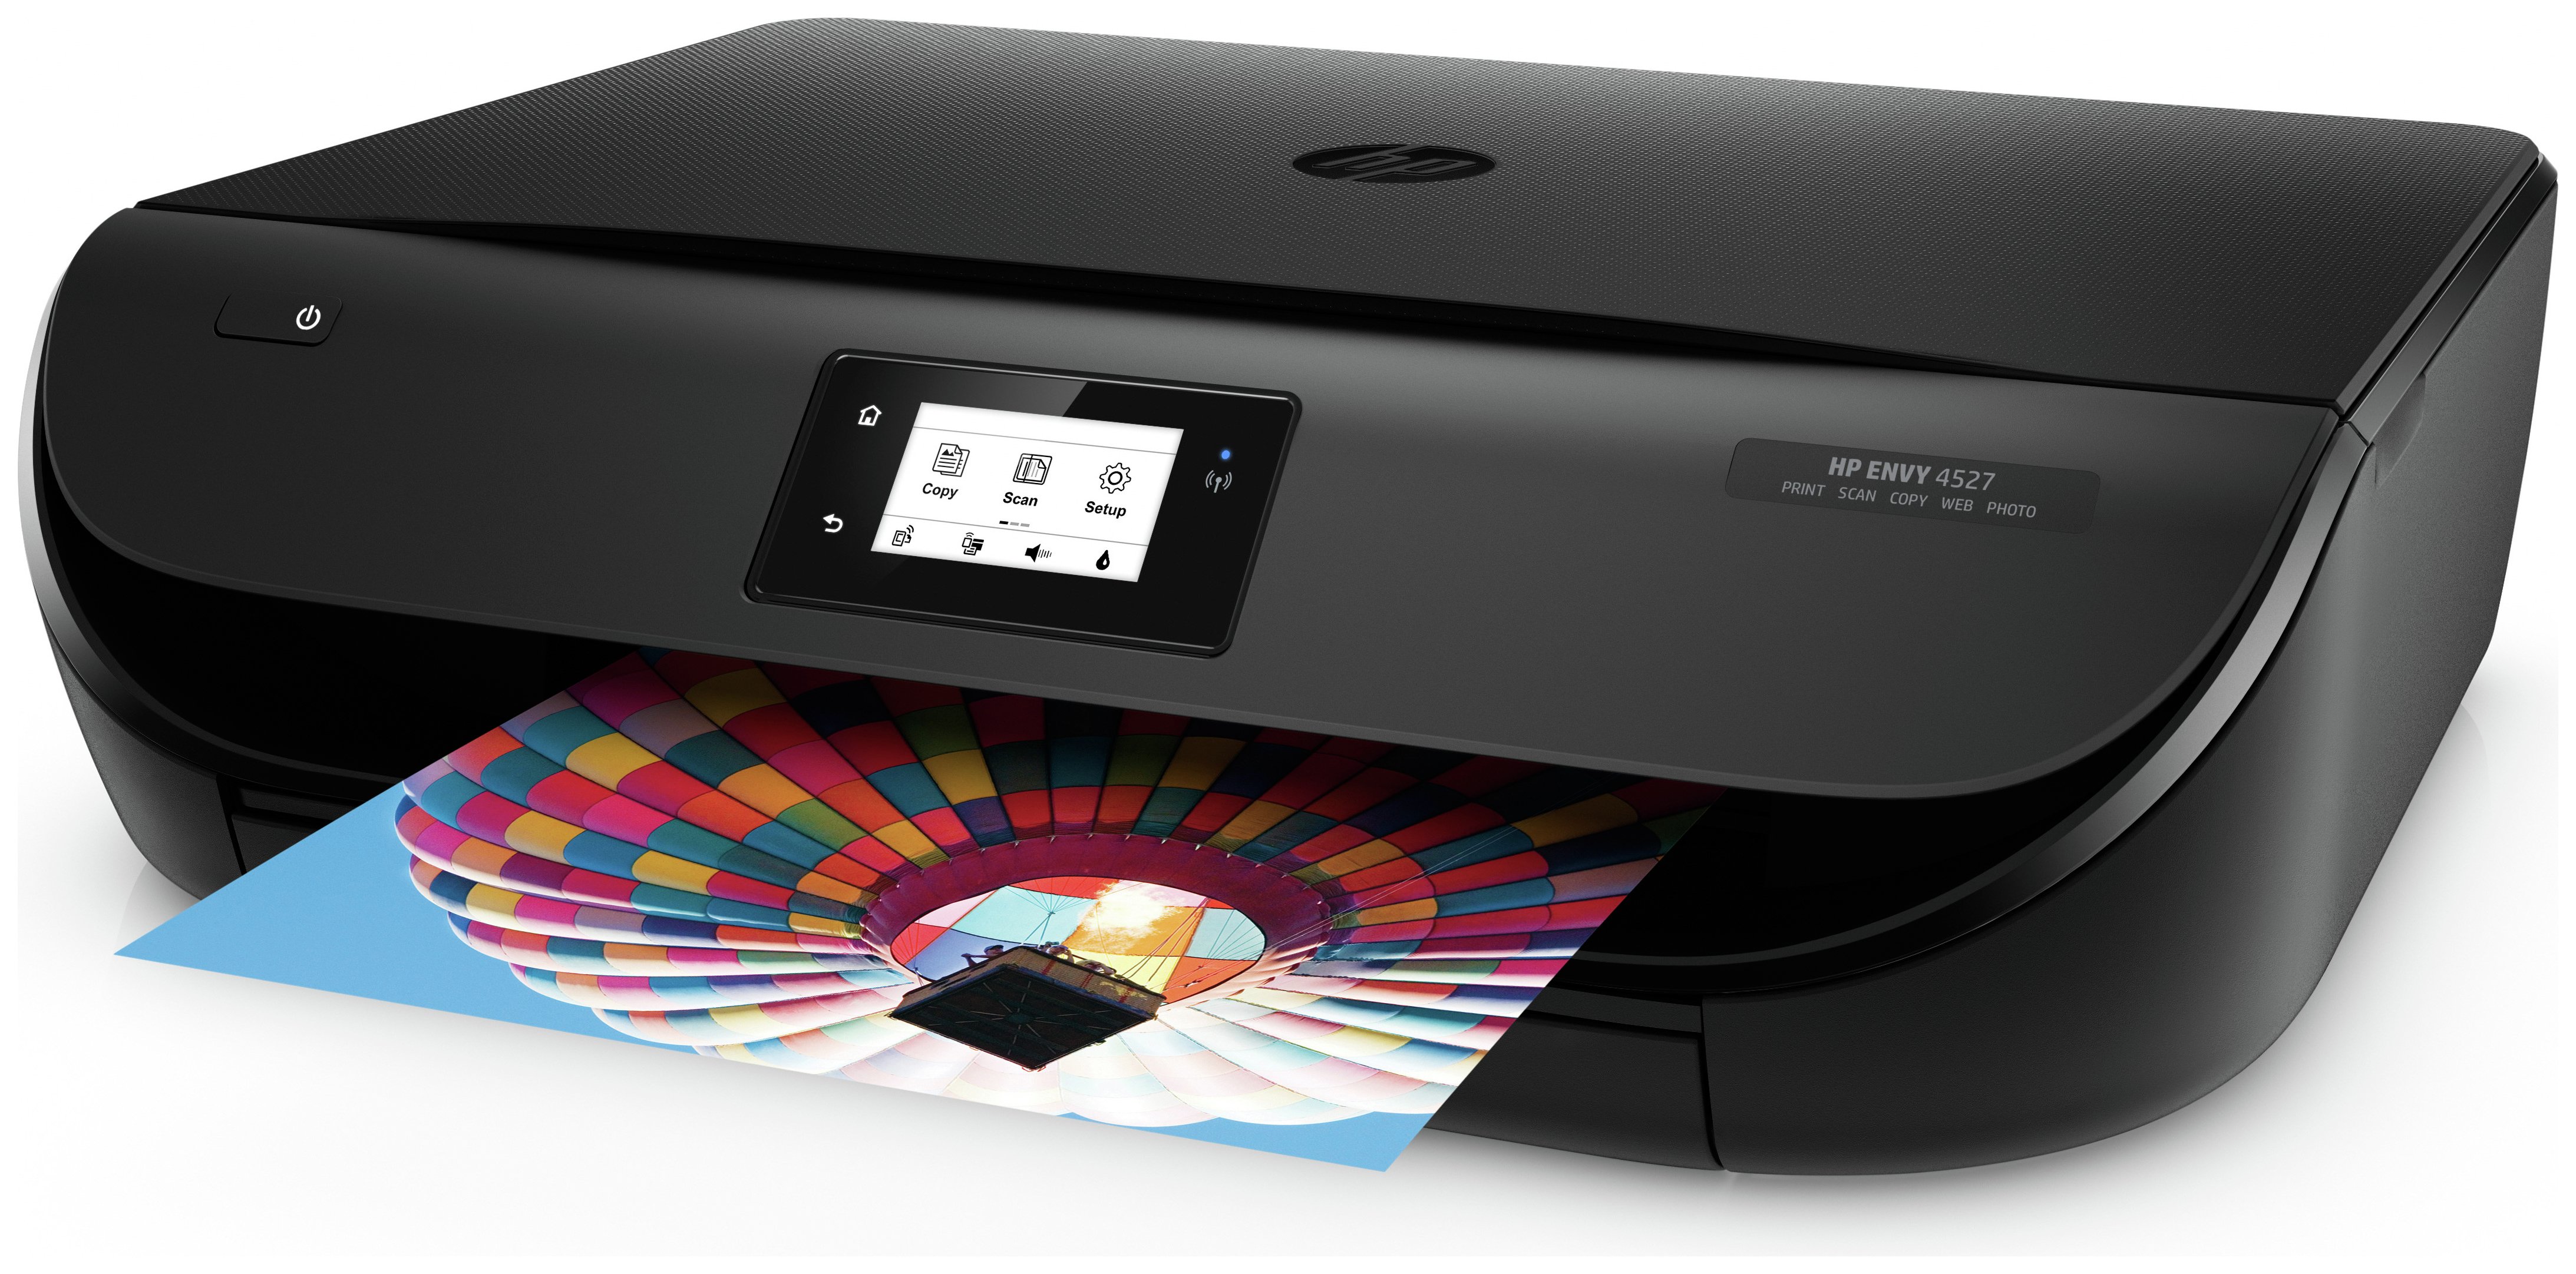 HP Envy 4527 Wireless AllinOne Printer Reviews